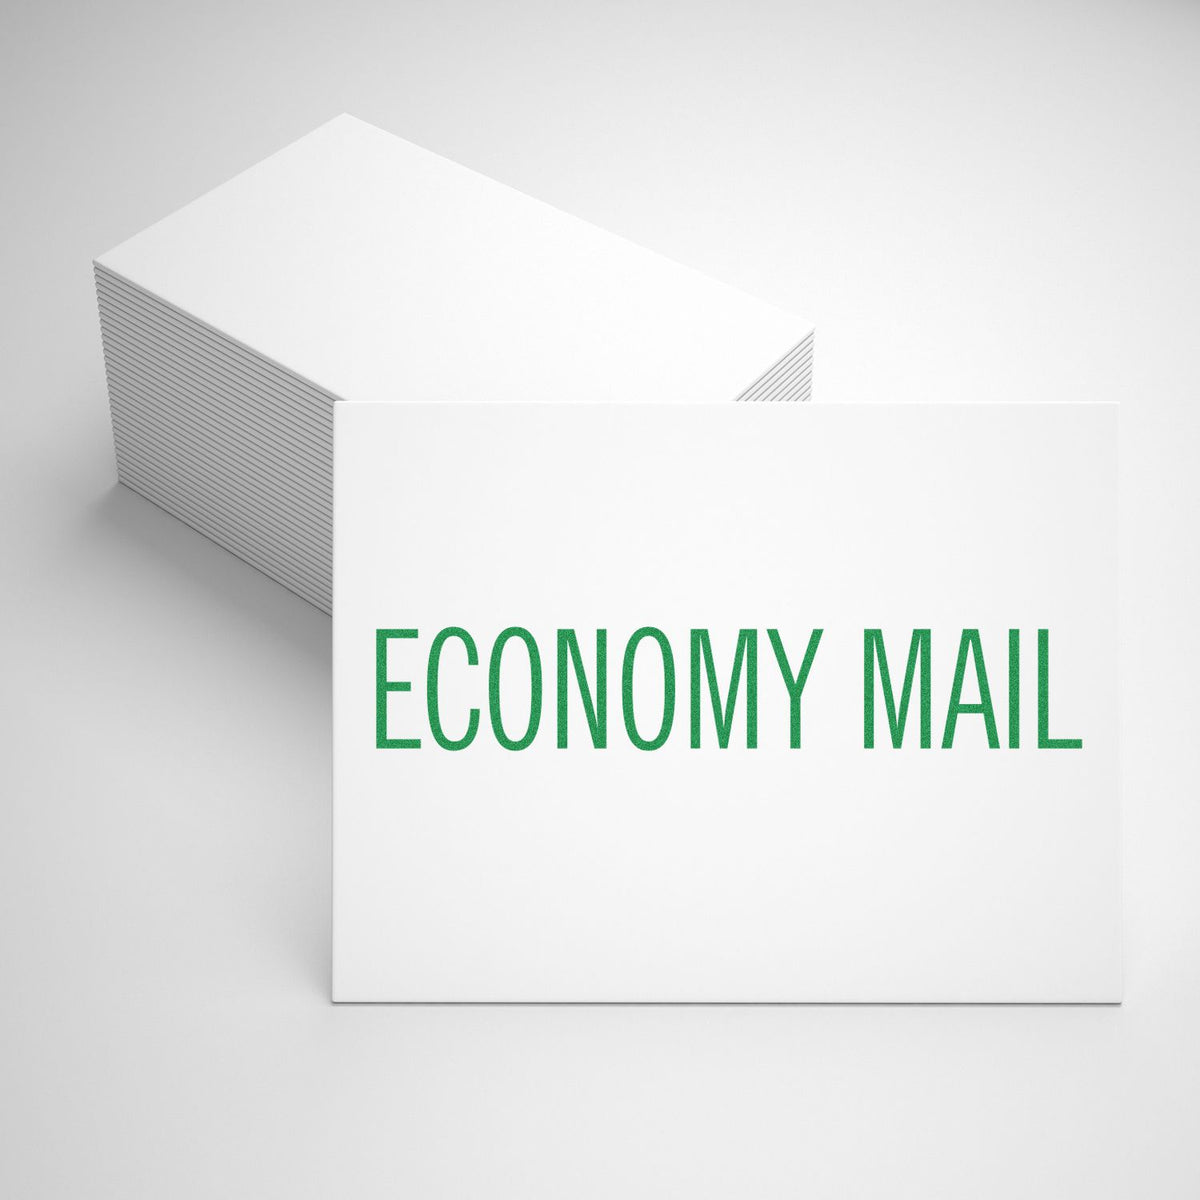 Slim Pre-Inked Economy Mail Stamp In Use